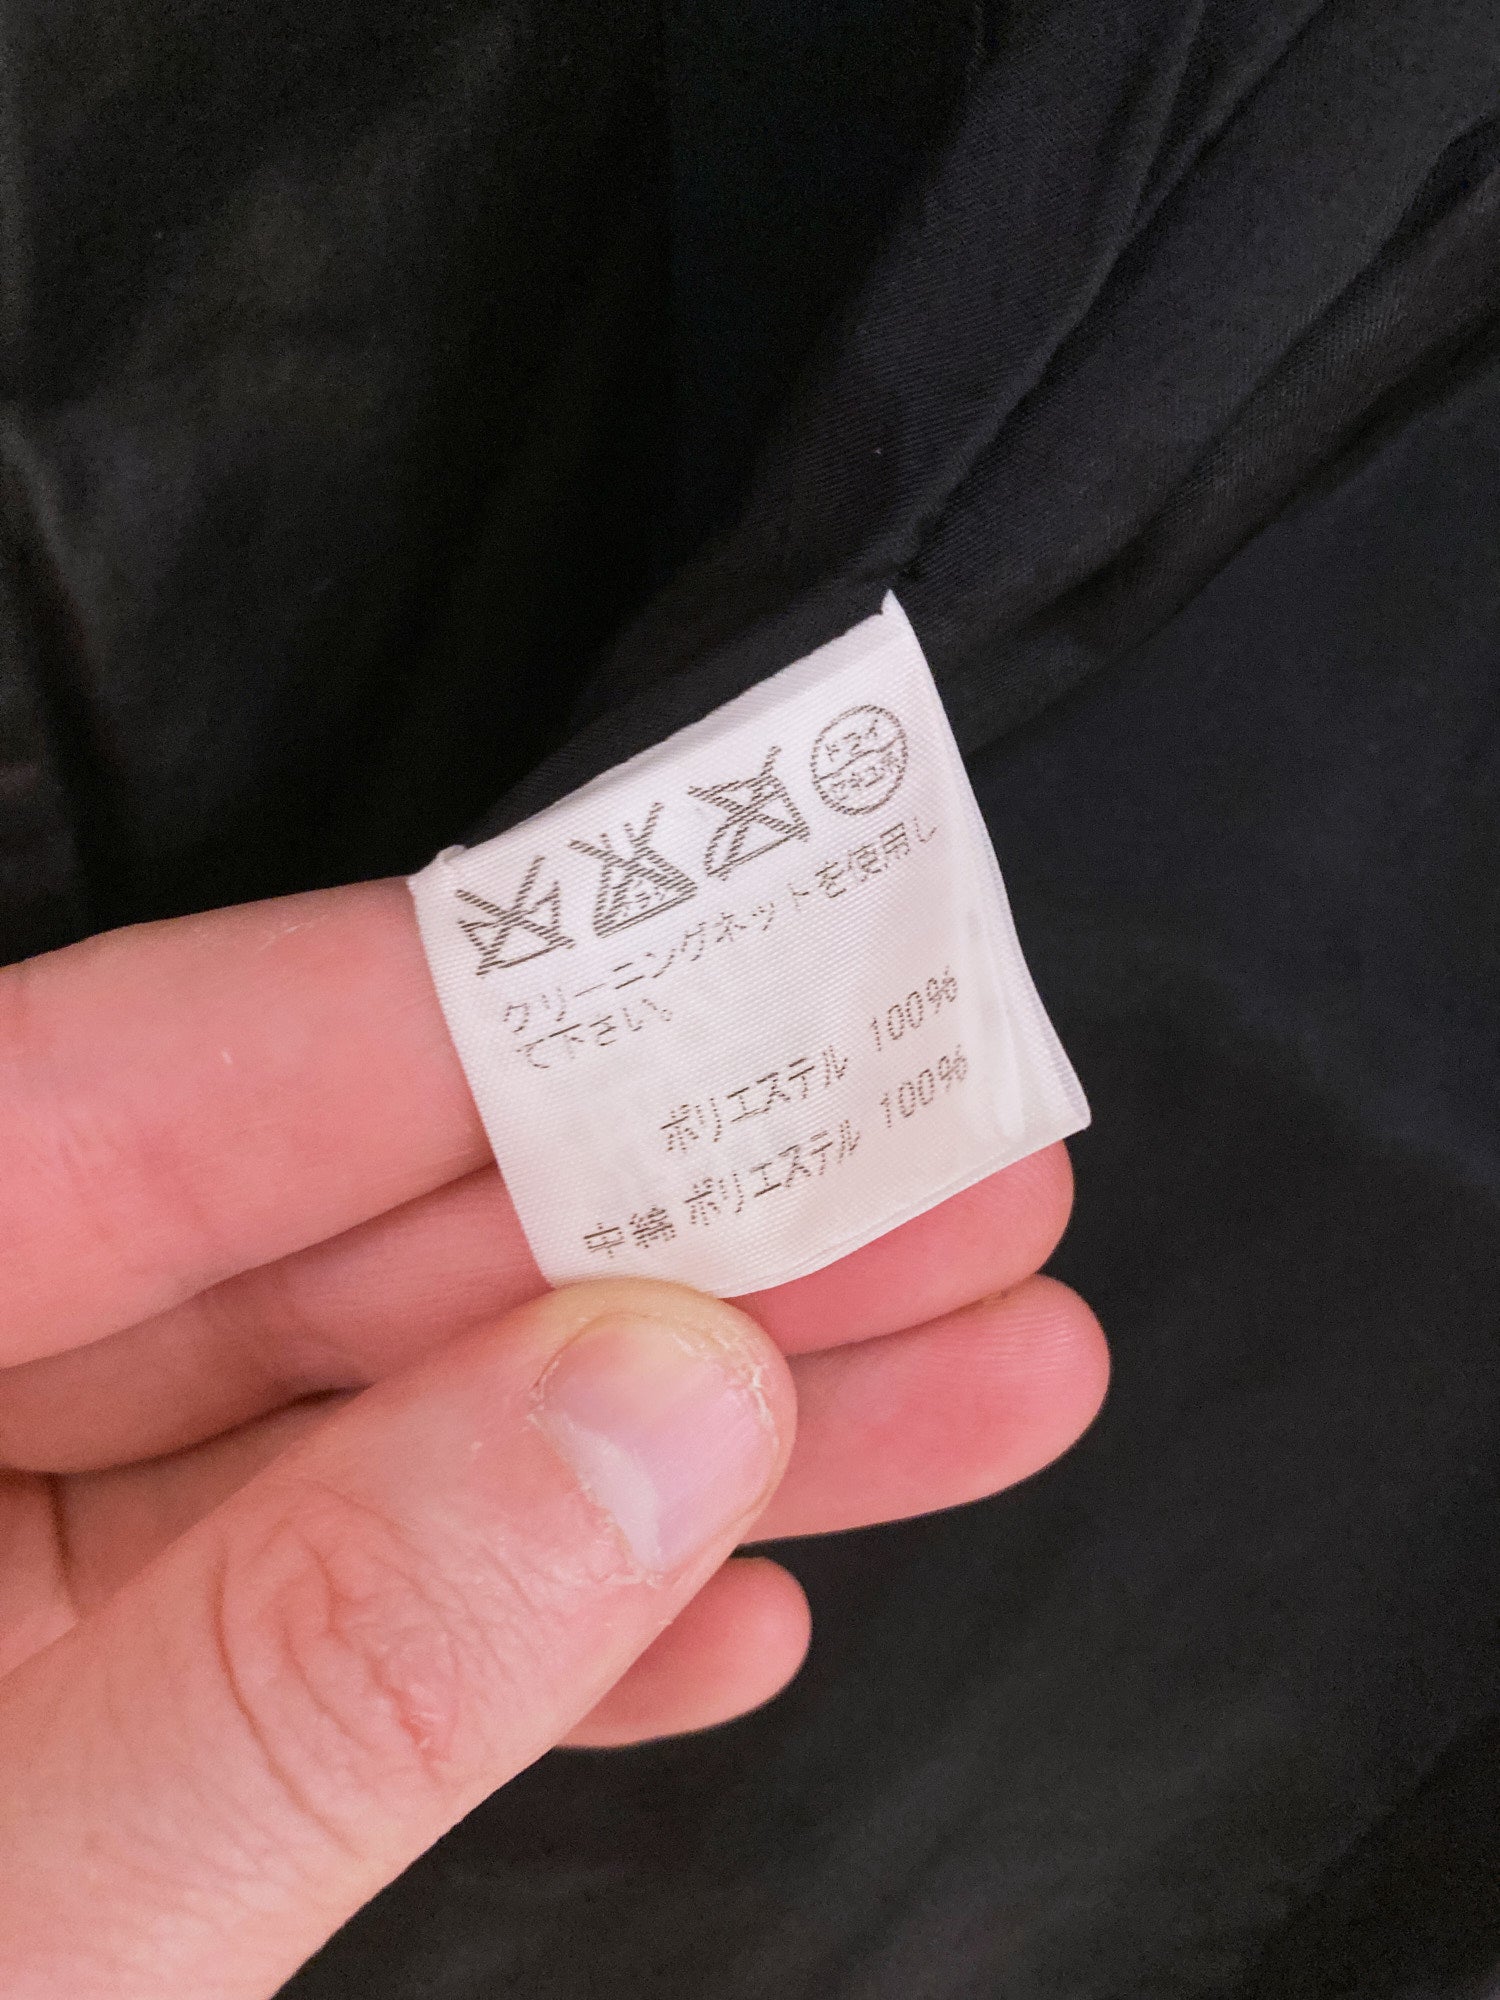 Issey Miyake FETE black vinyl-y polyester shawl collar puffer coat - size 3 L M